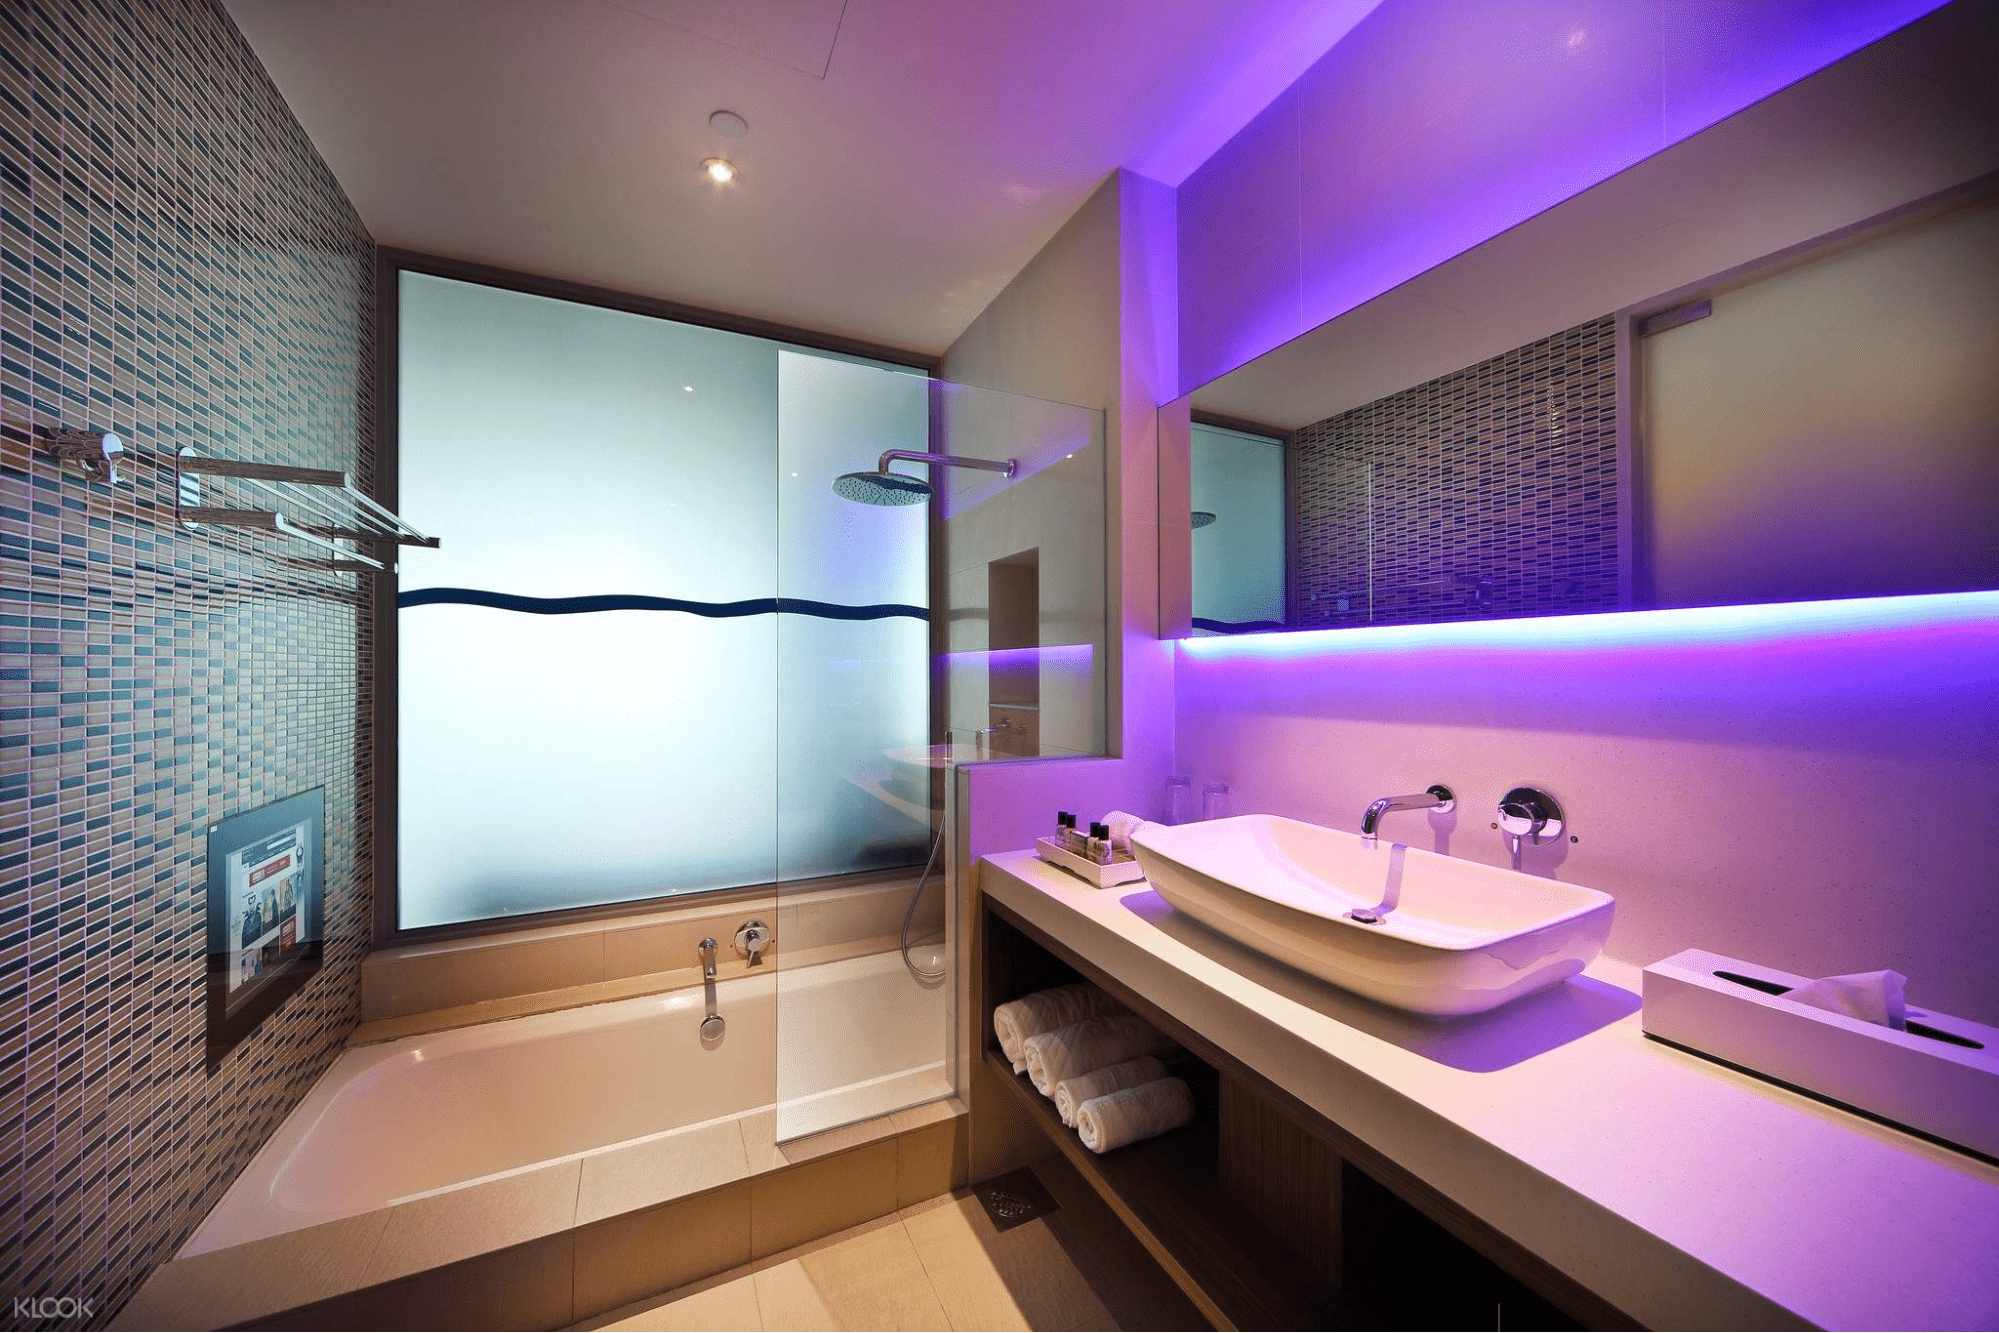 ONE°15 Marina Sentosa Cove - bathroom with tub and TV